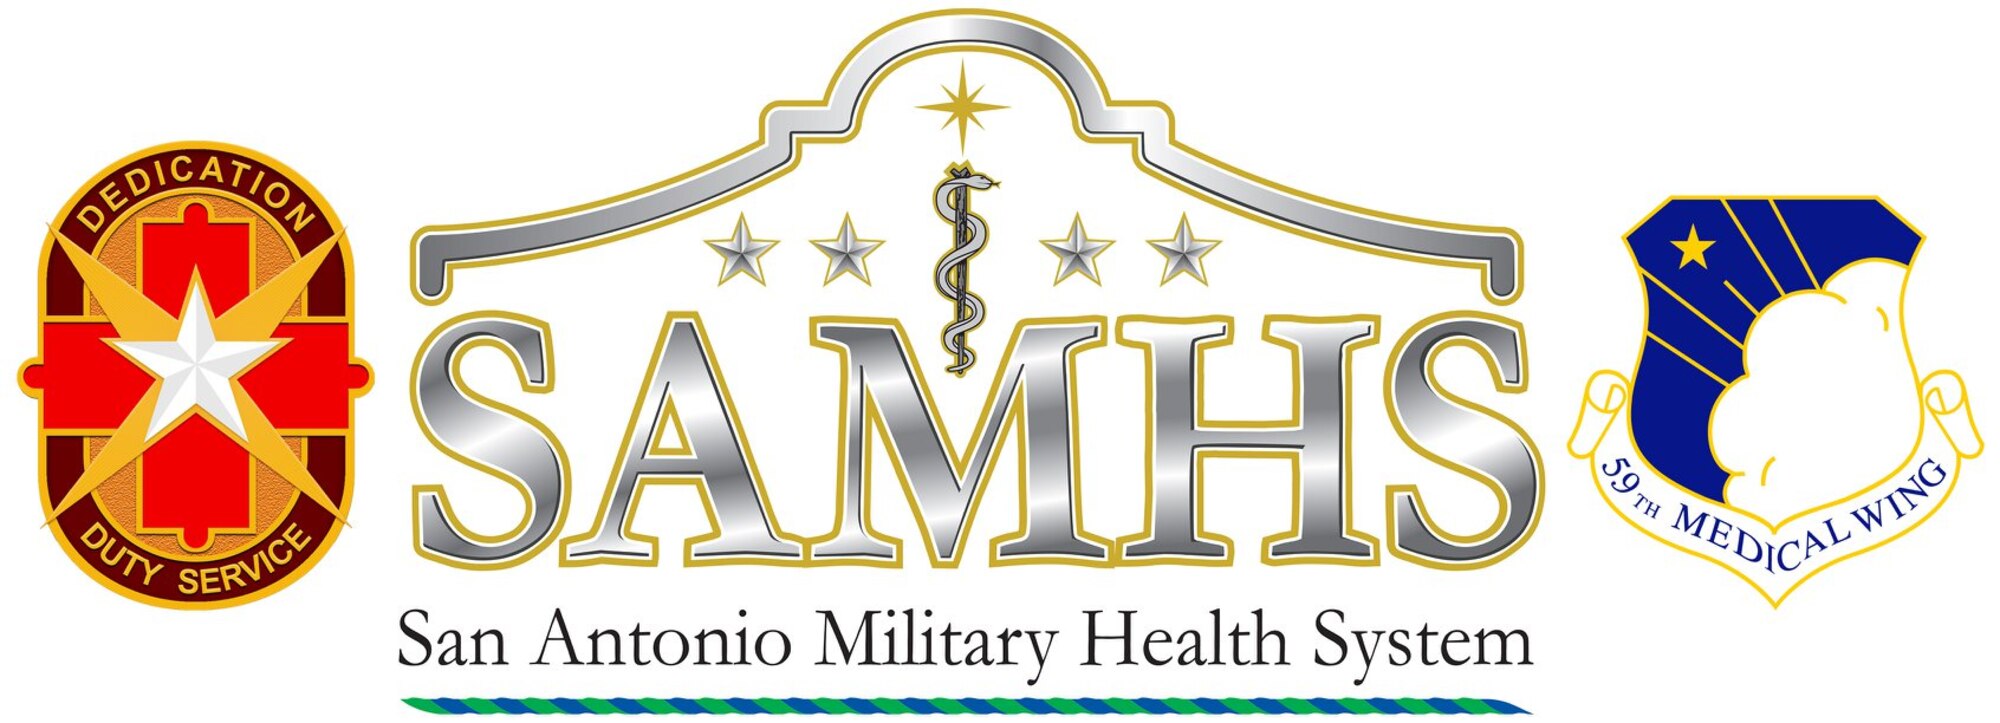 San Antonio Military Health System logo